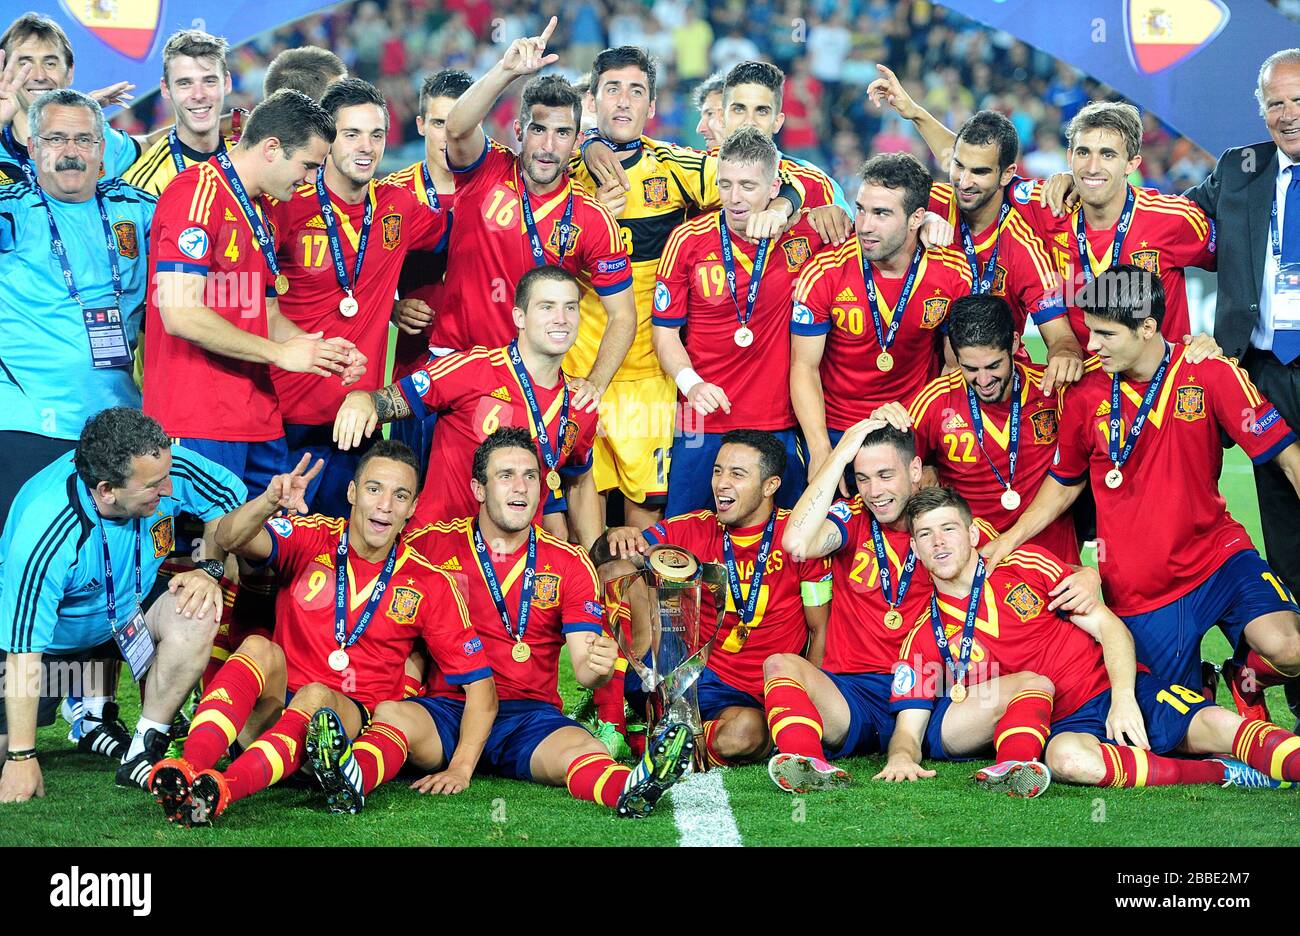 Campionato Europeo Uefa Under 21 2013 Immagini e Fotos Stock - Alamy